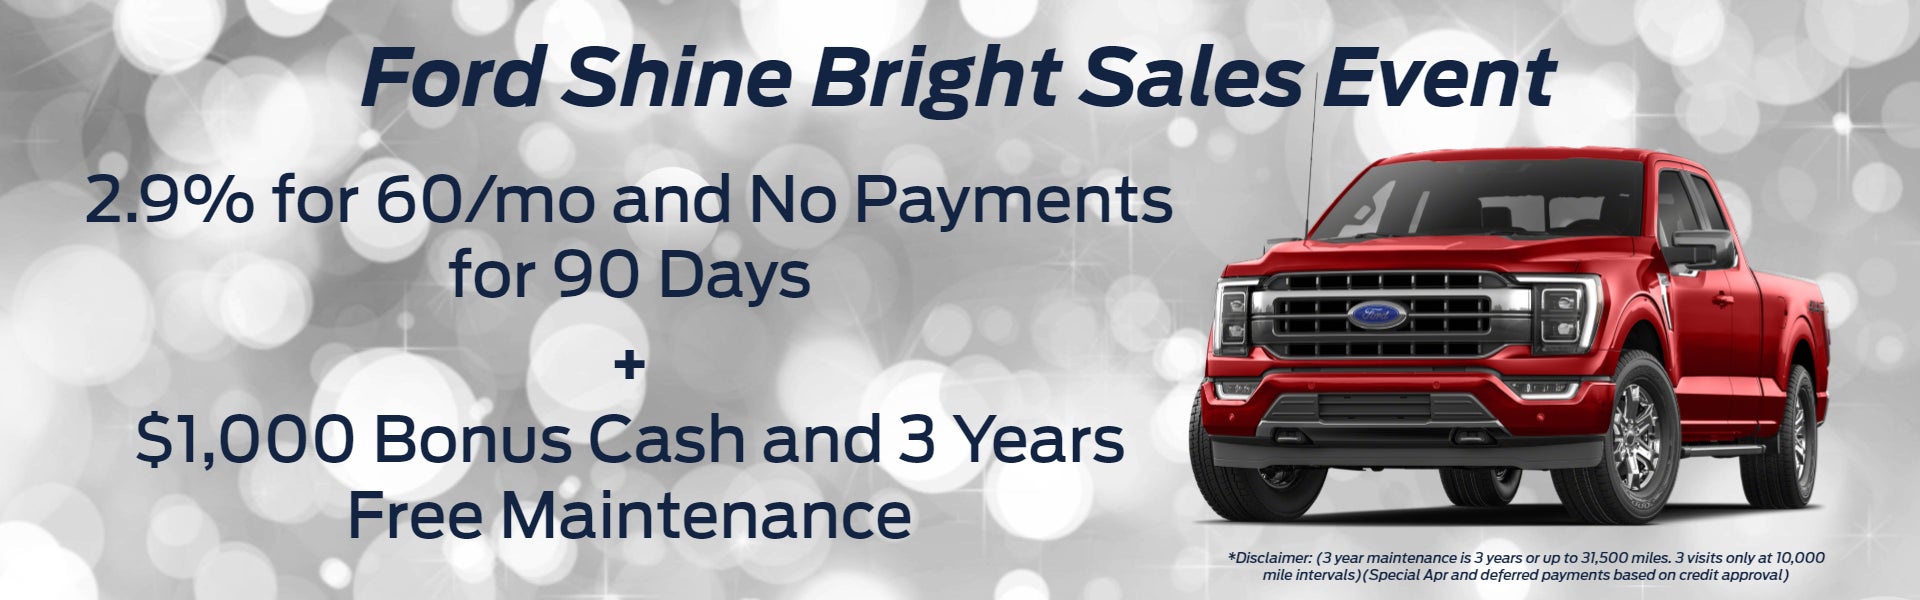 Ford Shine Bright Sales Event 